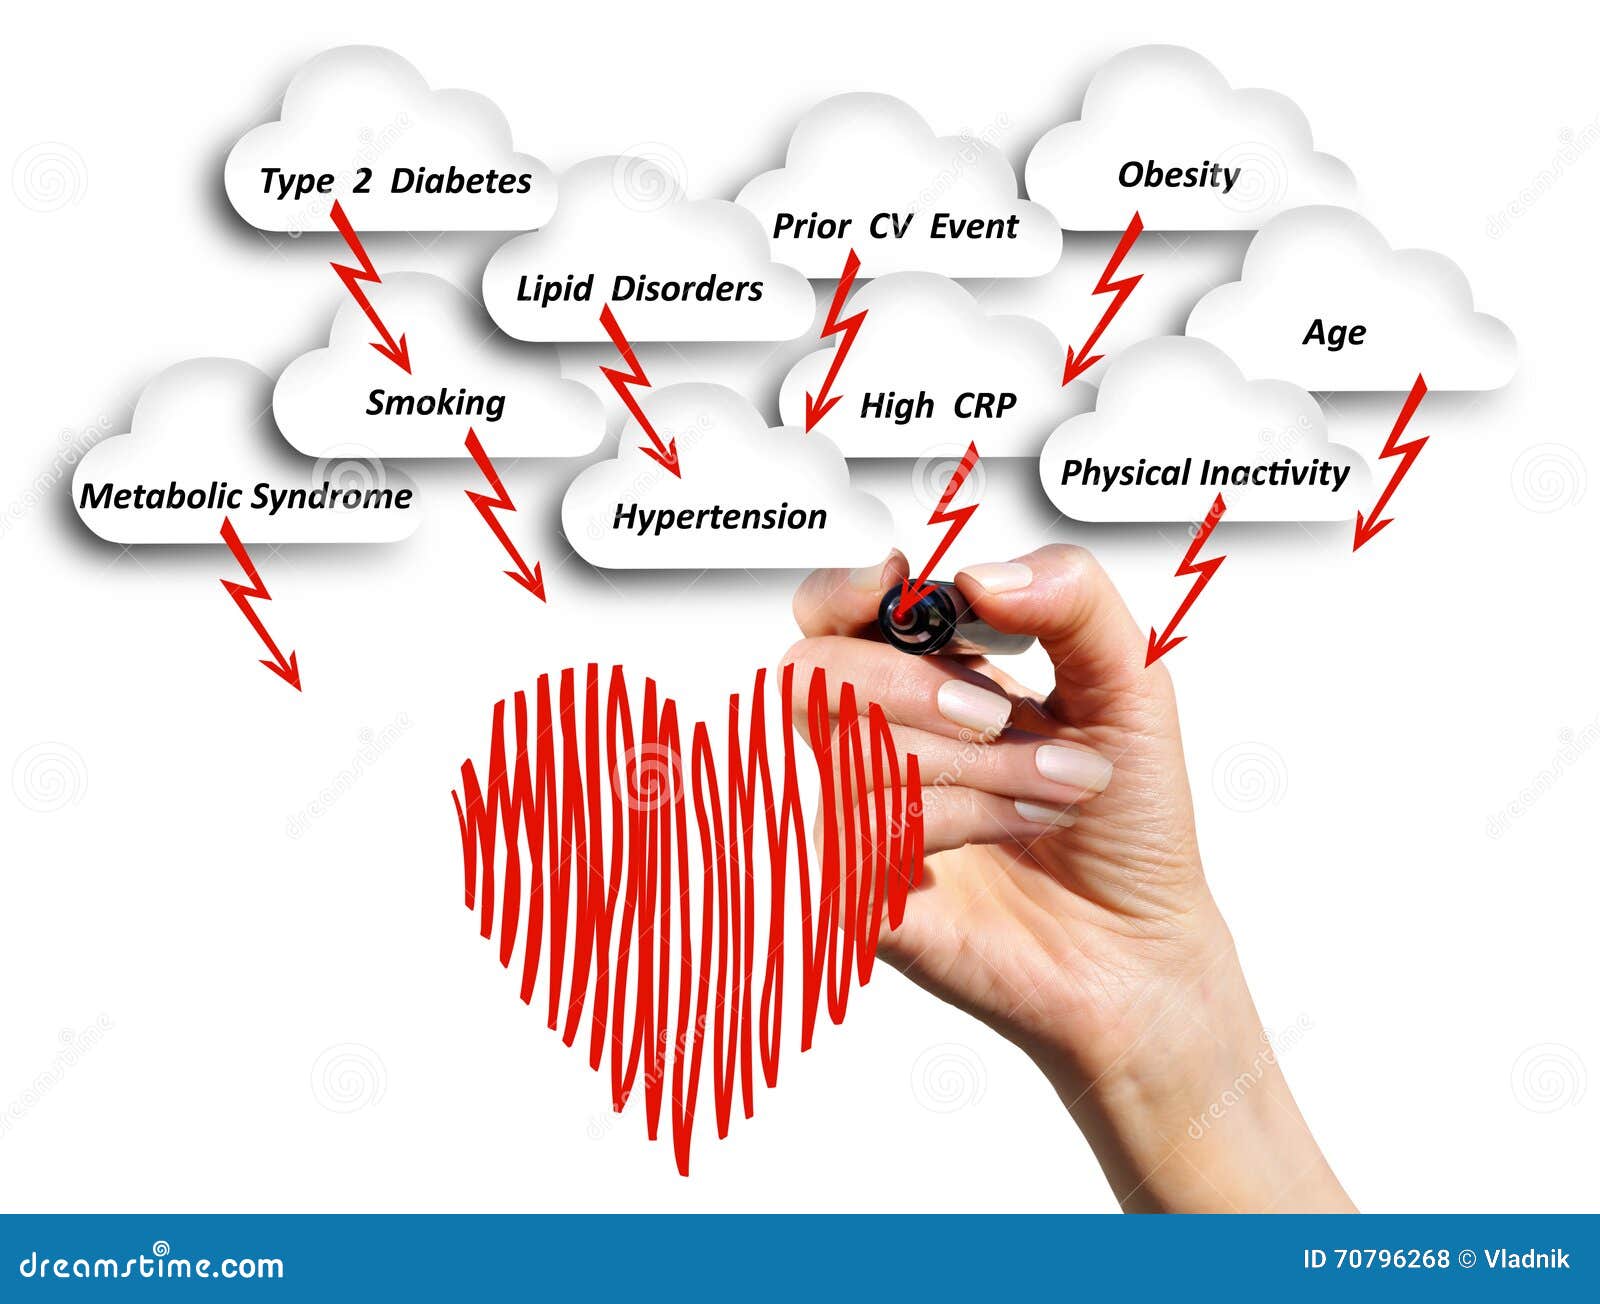 the risk of cardiovascular disease